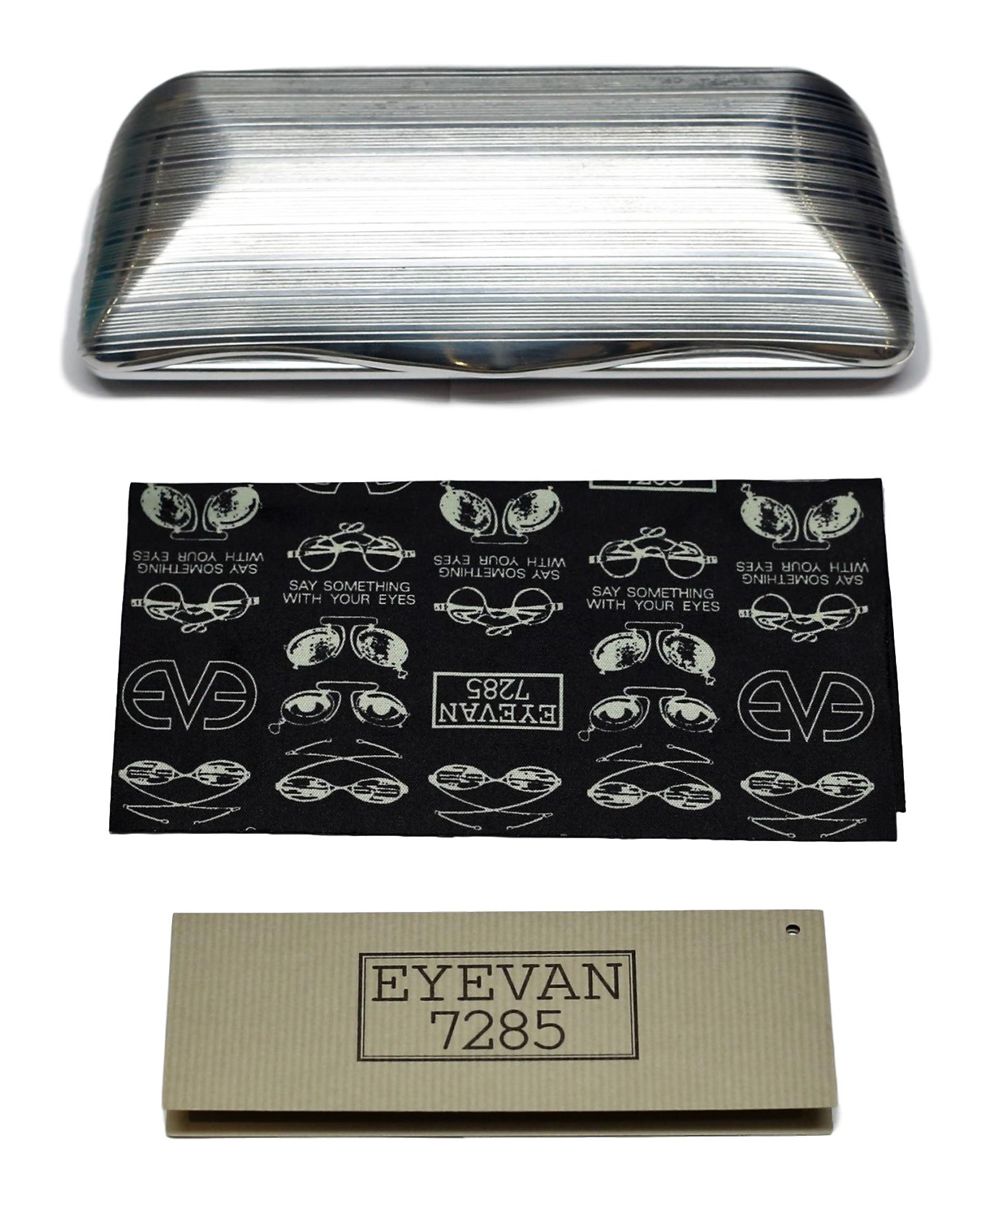 Eyevan 7285 Case